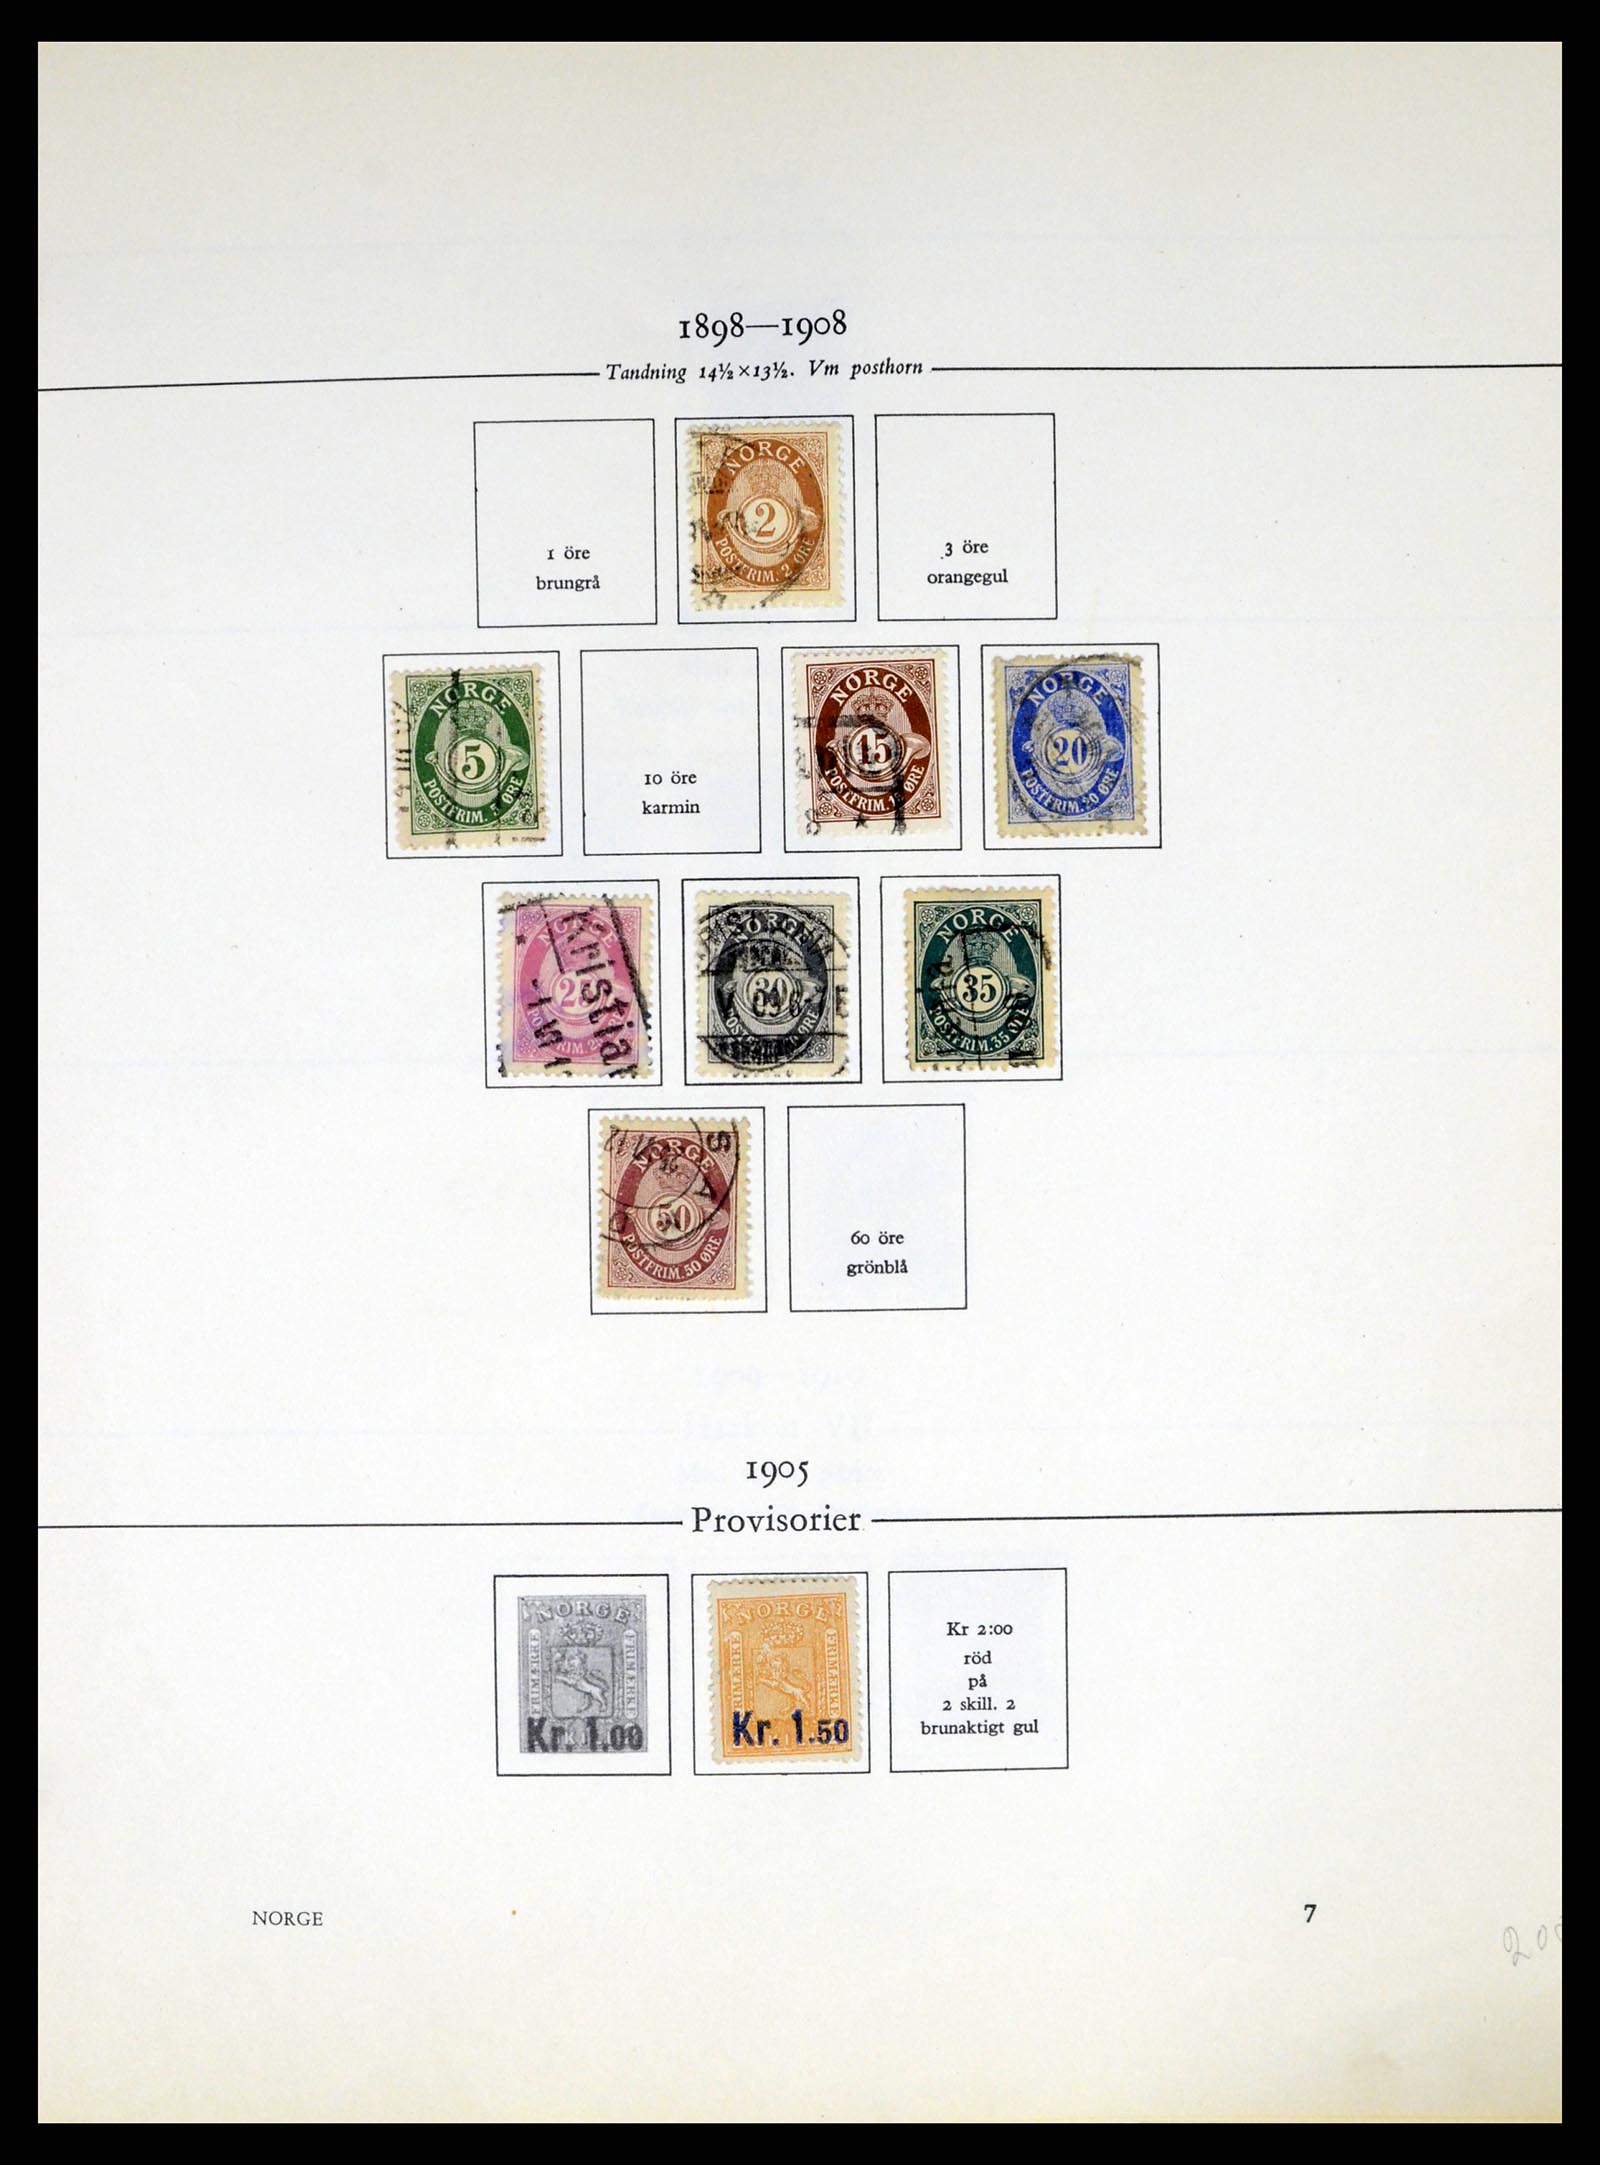 37387 007 - Stamp collection 37387 Scandinavia 1851-1960.